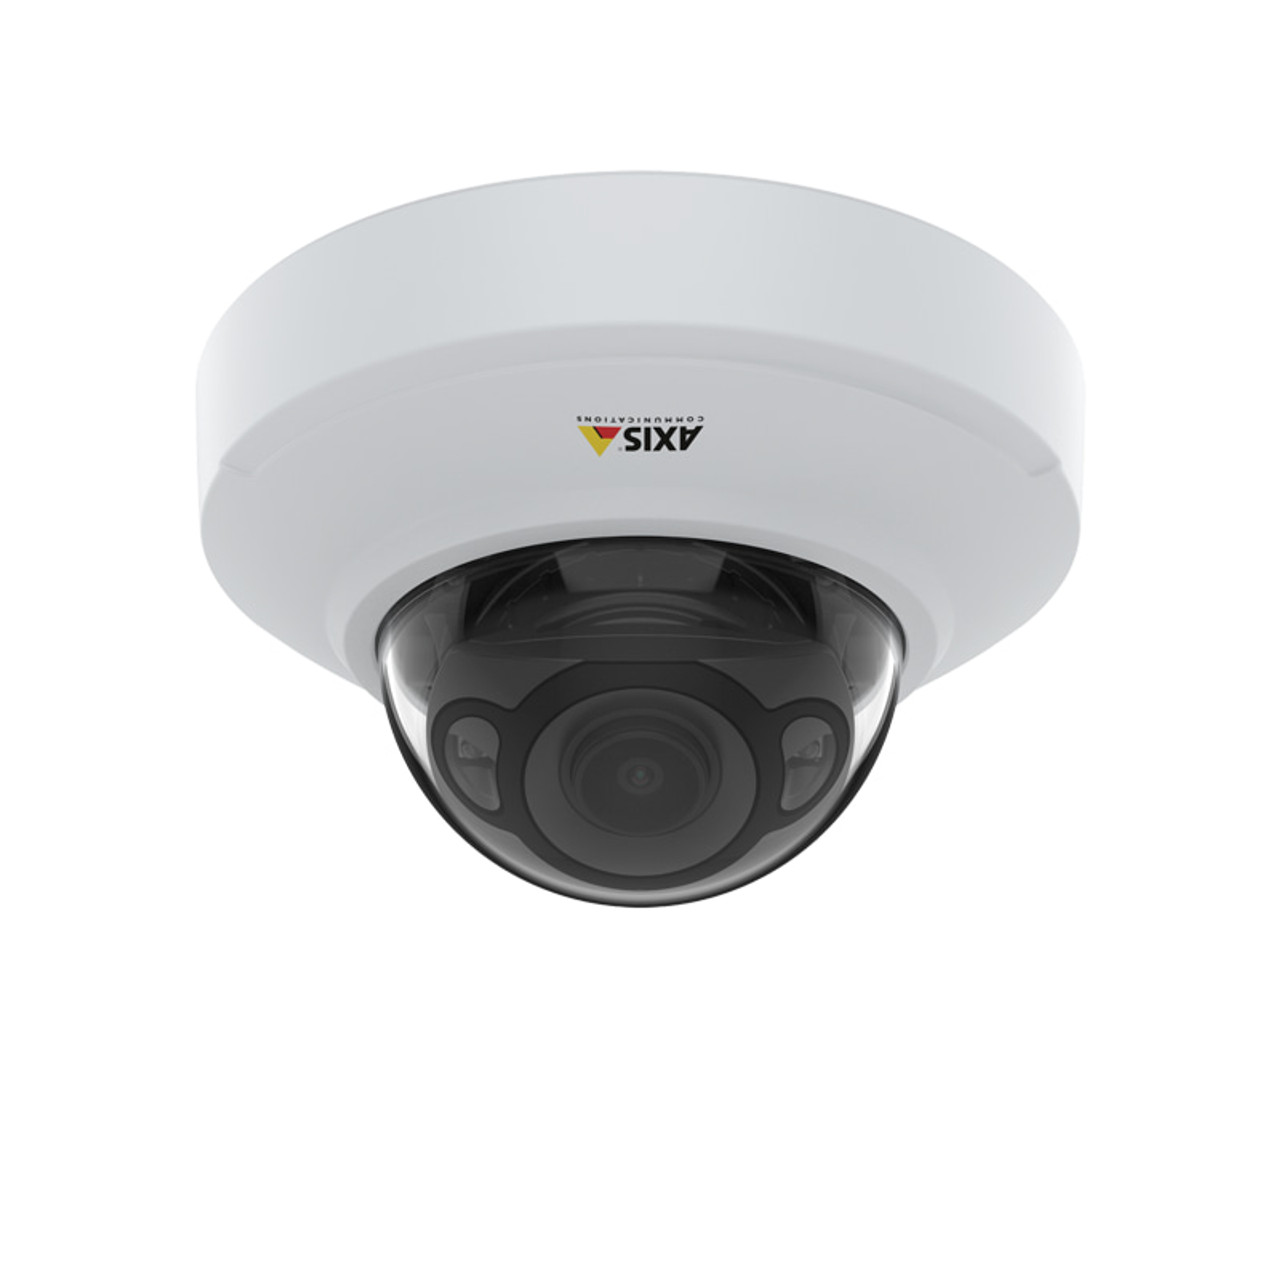 AXIS M4216-LV - network surveillance camera - dome - 02113-001